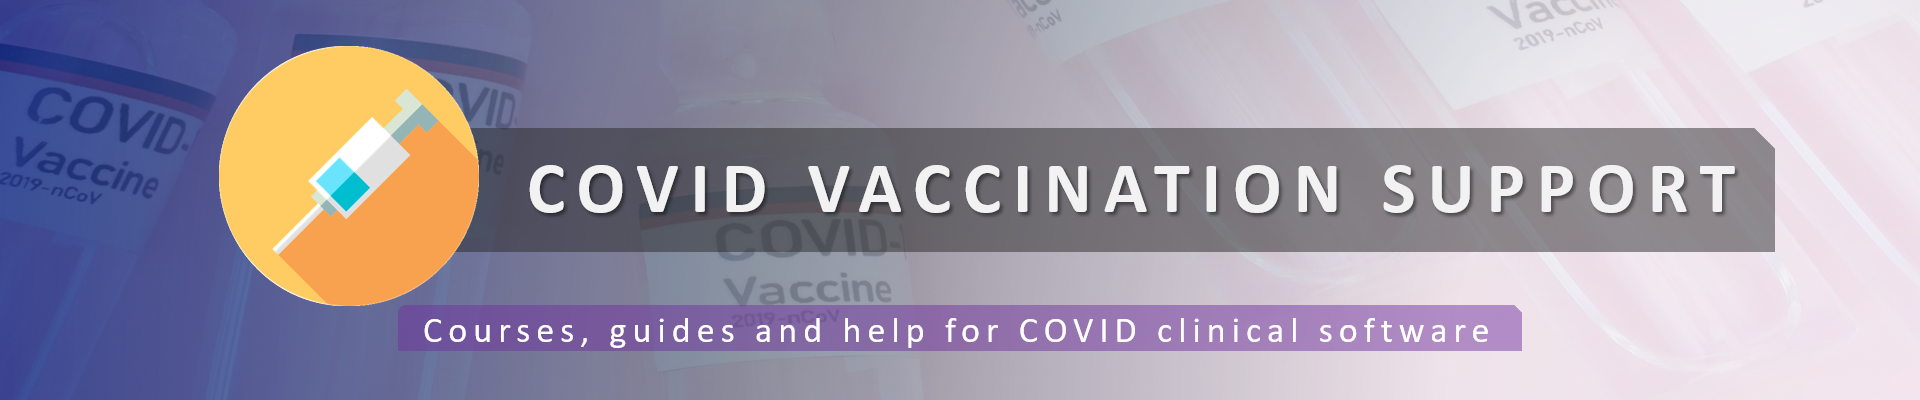 https://itservices.midlandsandlancashirecsu.nhs.uk/kb/covid-19-vaccination-support/